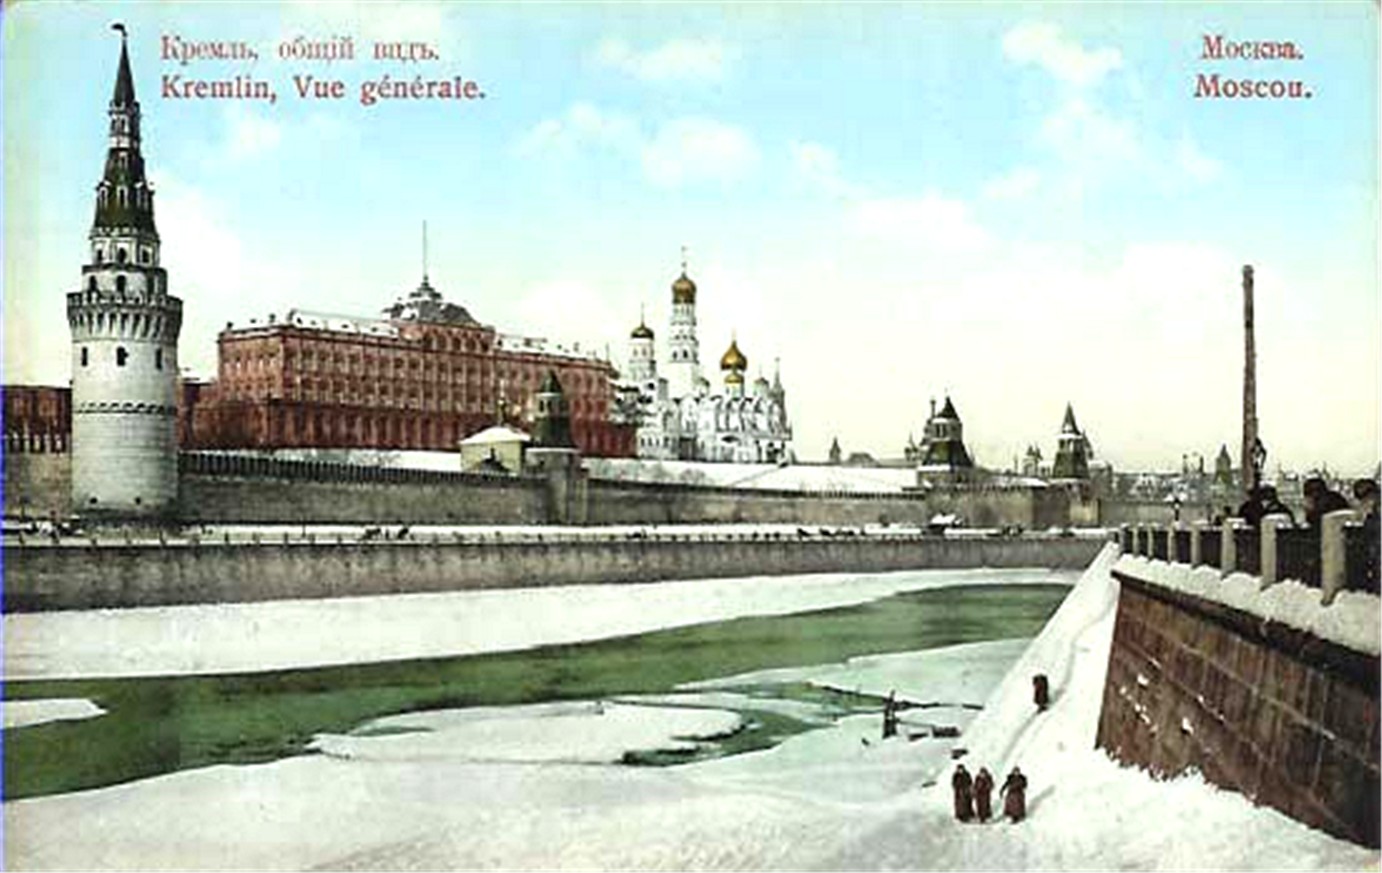 moscows-now-kremlin